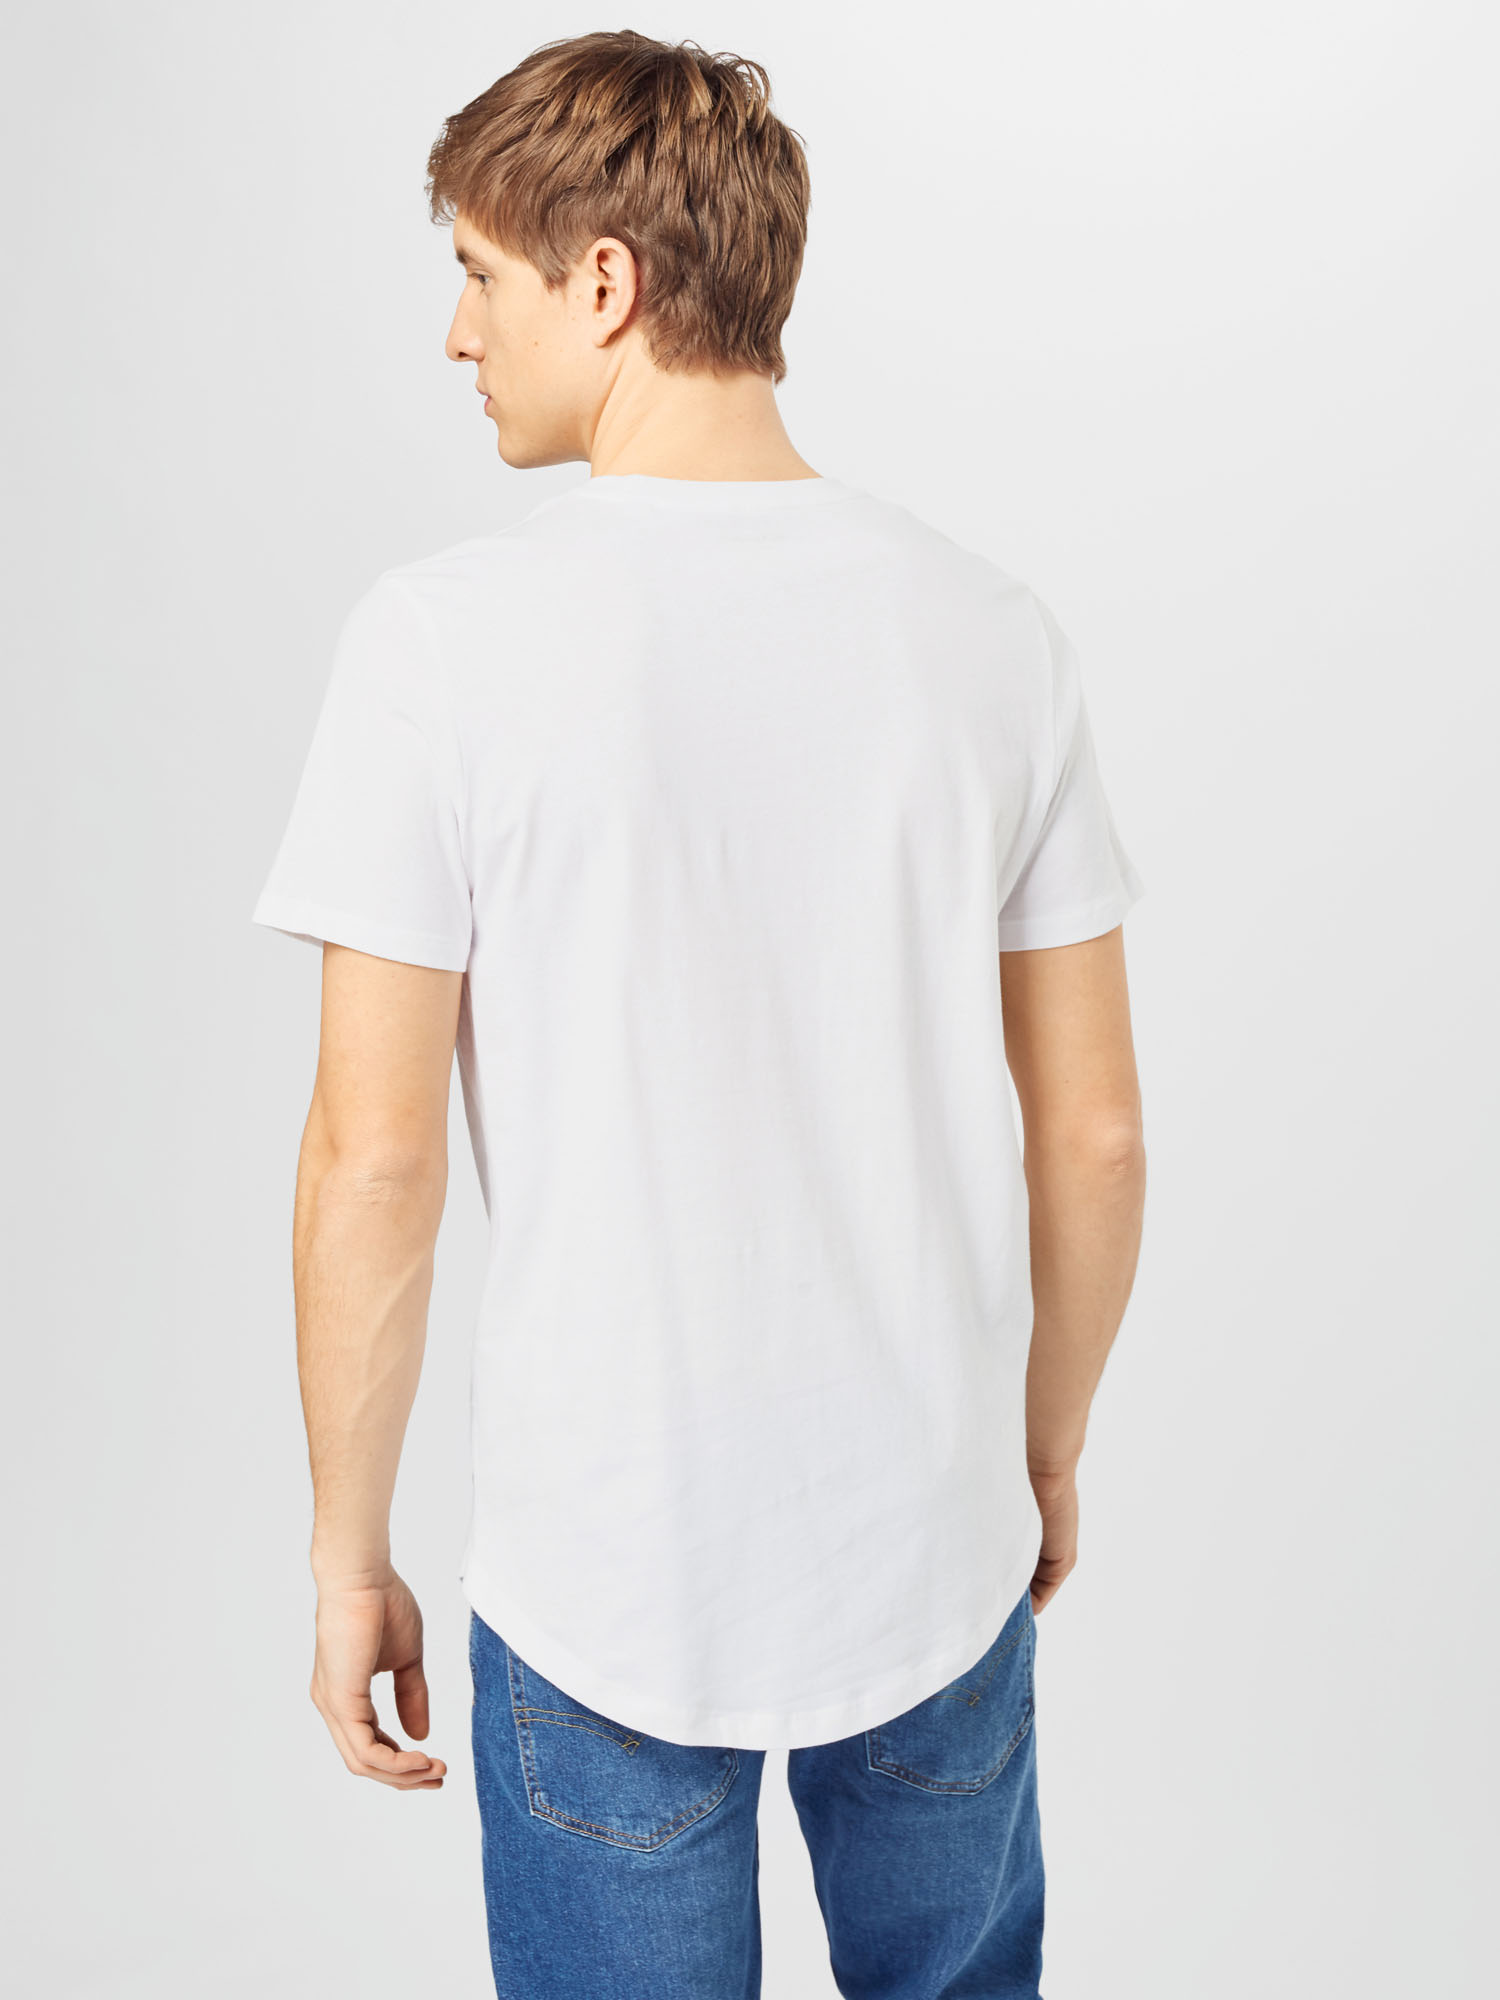 Koszulki HEbQd JACK & JONES Koszulka ENOA w kolorze Białym 